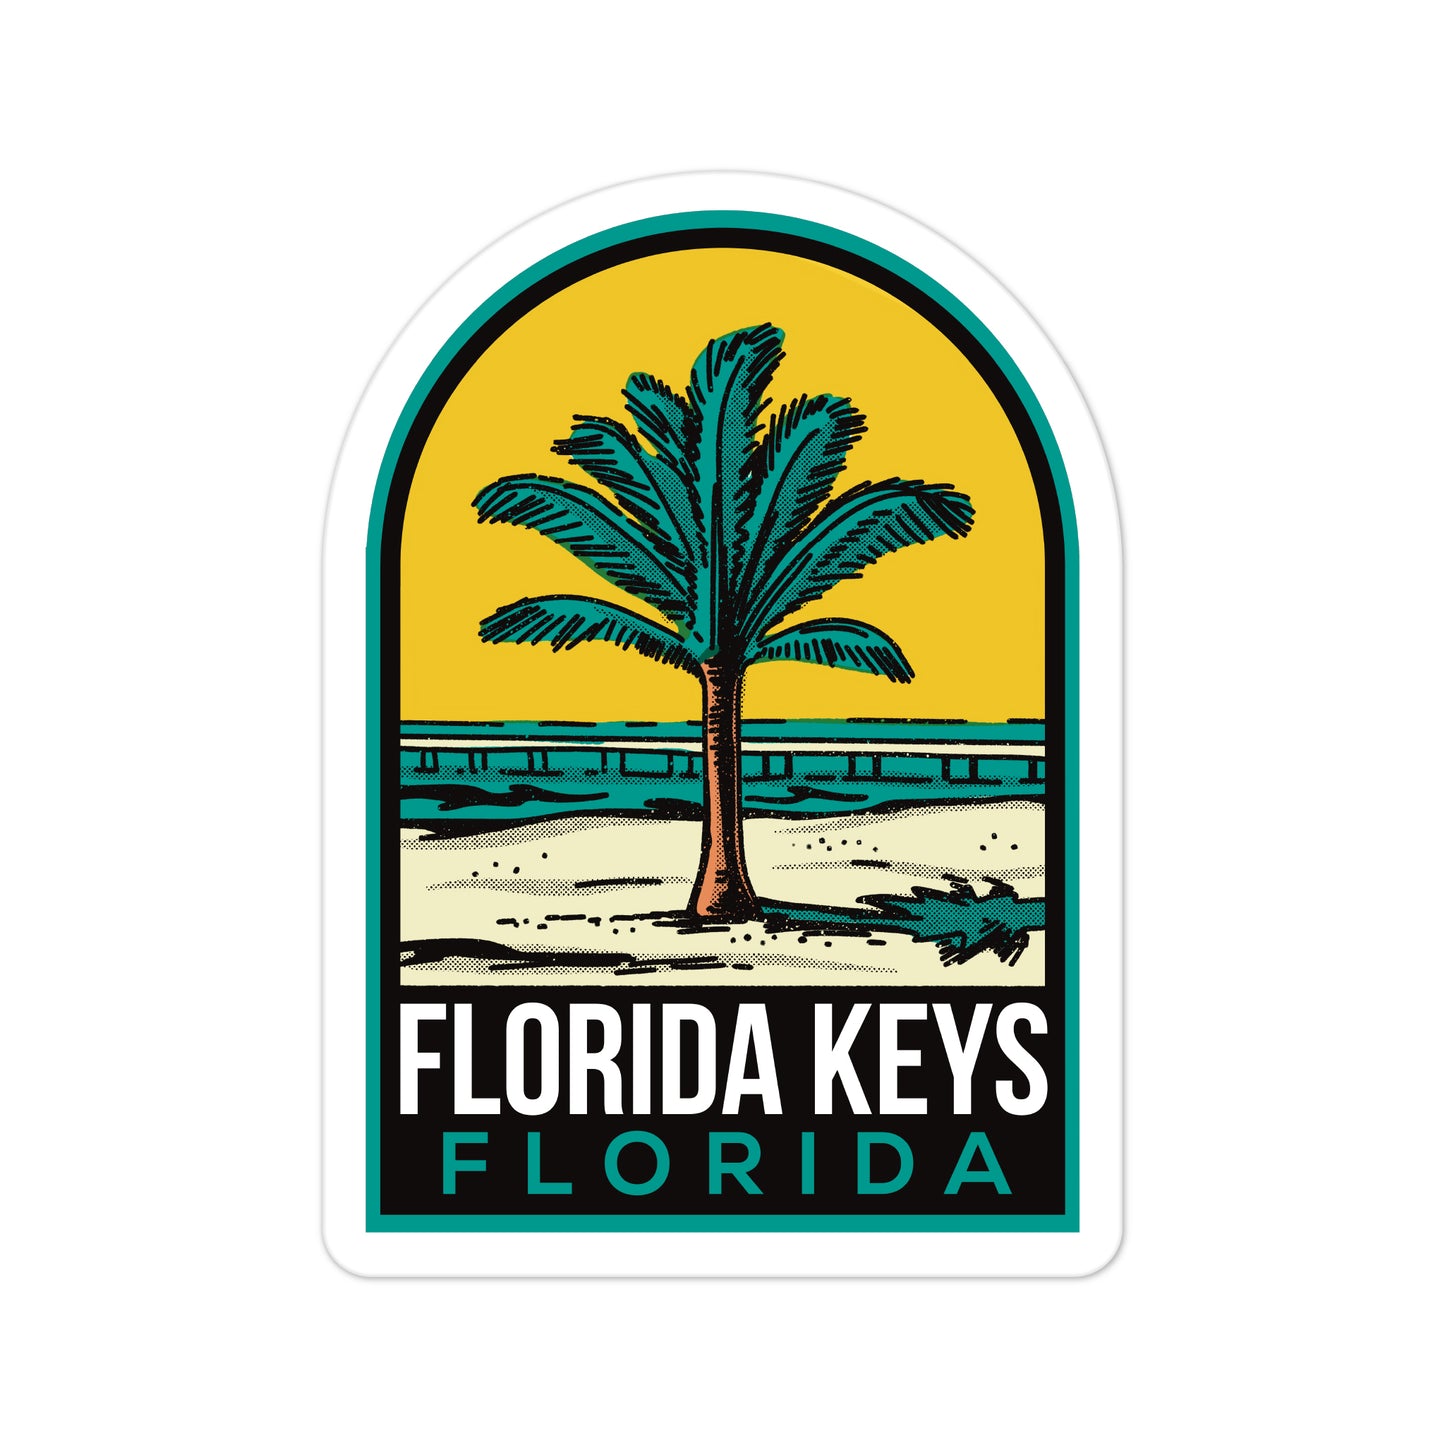 A sticker of the Florida Keys